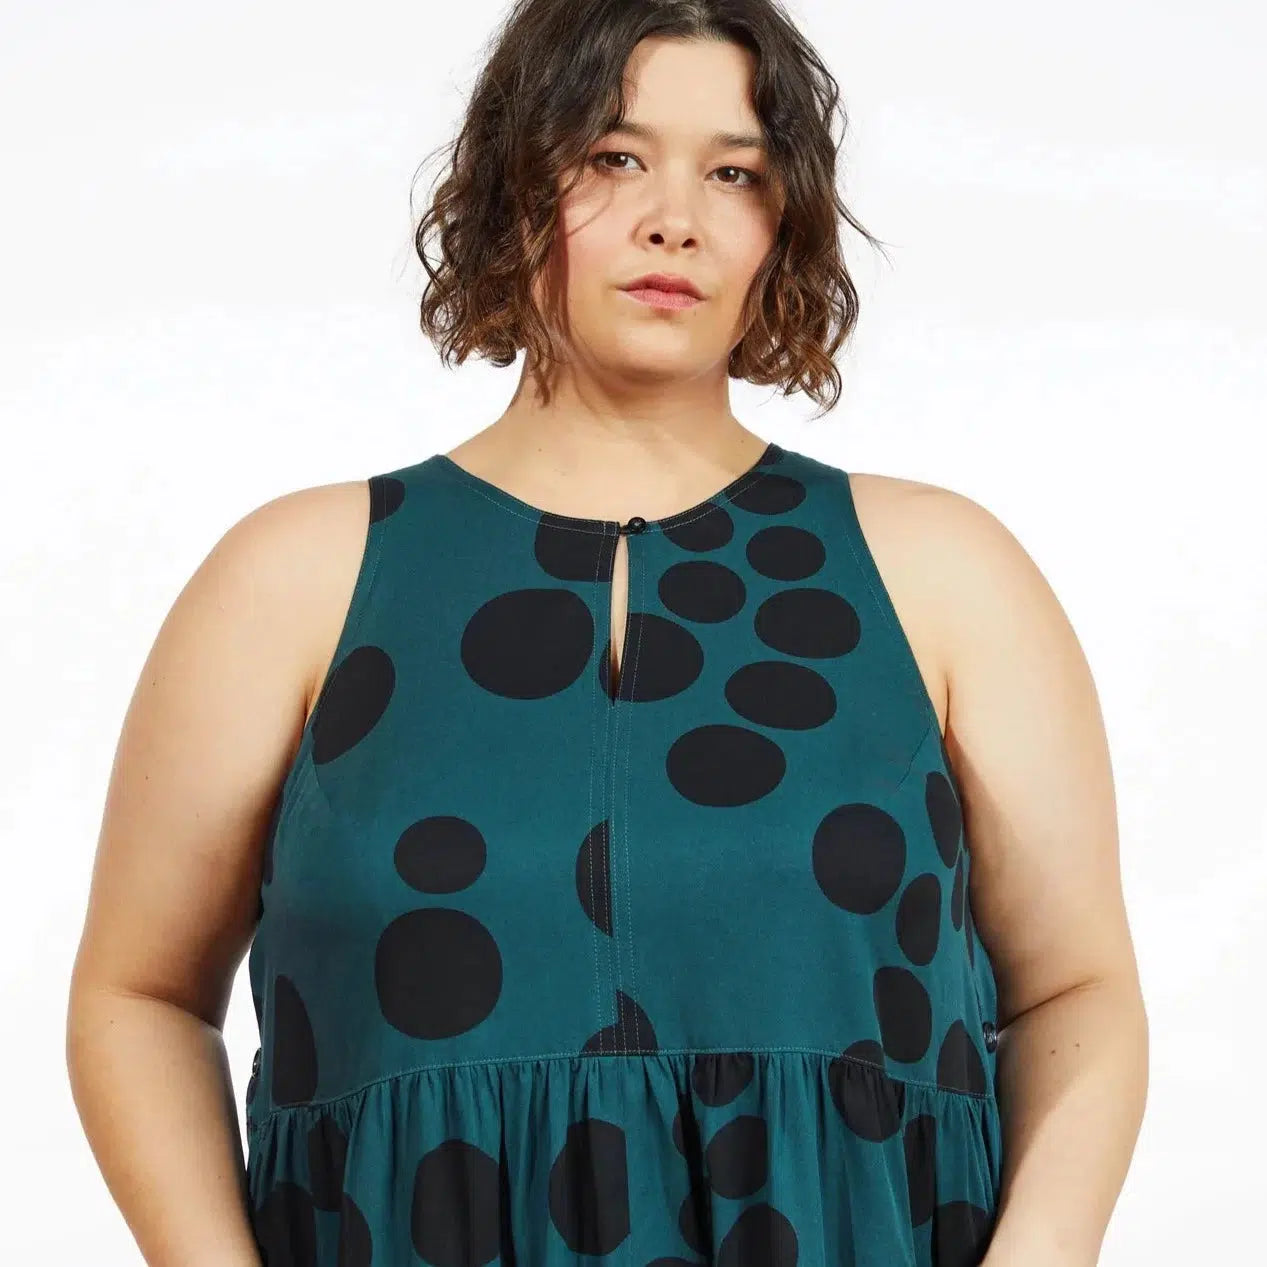 Grainline Studio-Austin Dress Pattern-sewing pattern-Sizes 14-32-gather here online